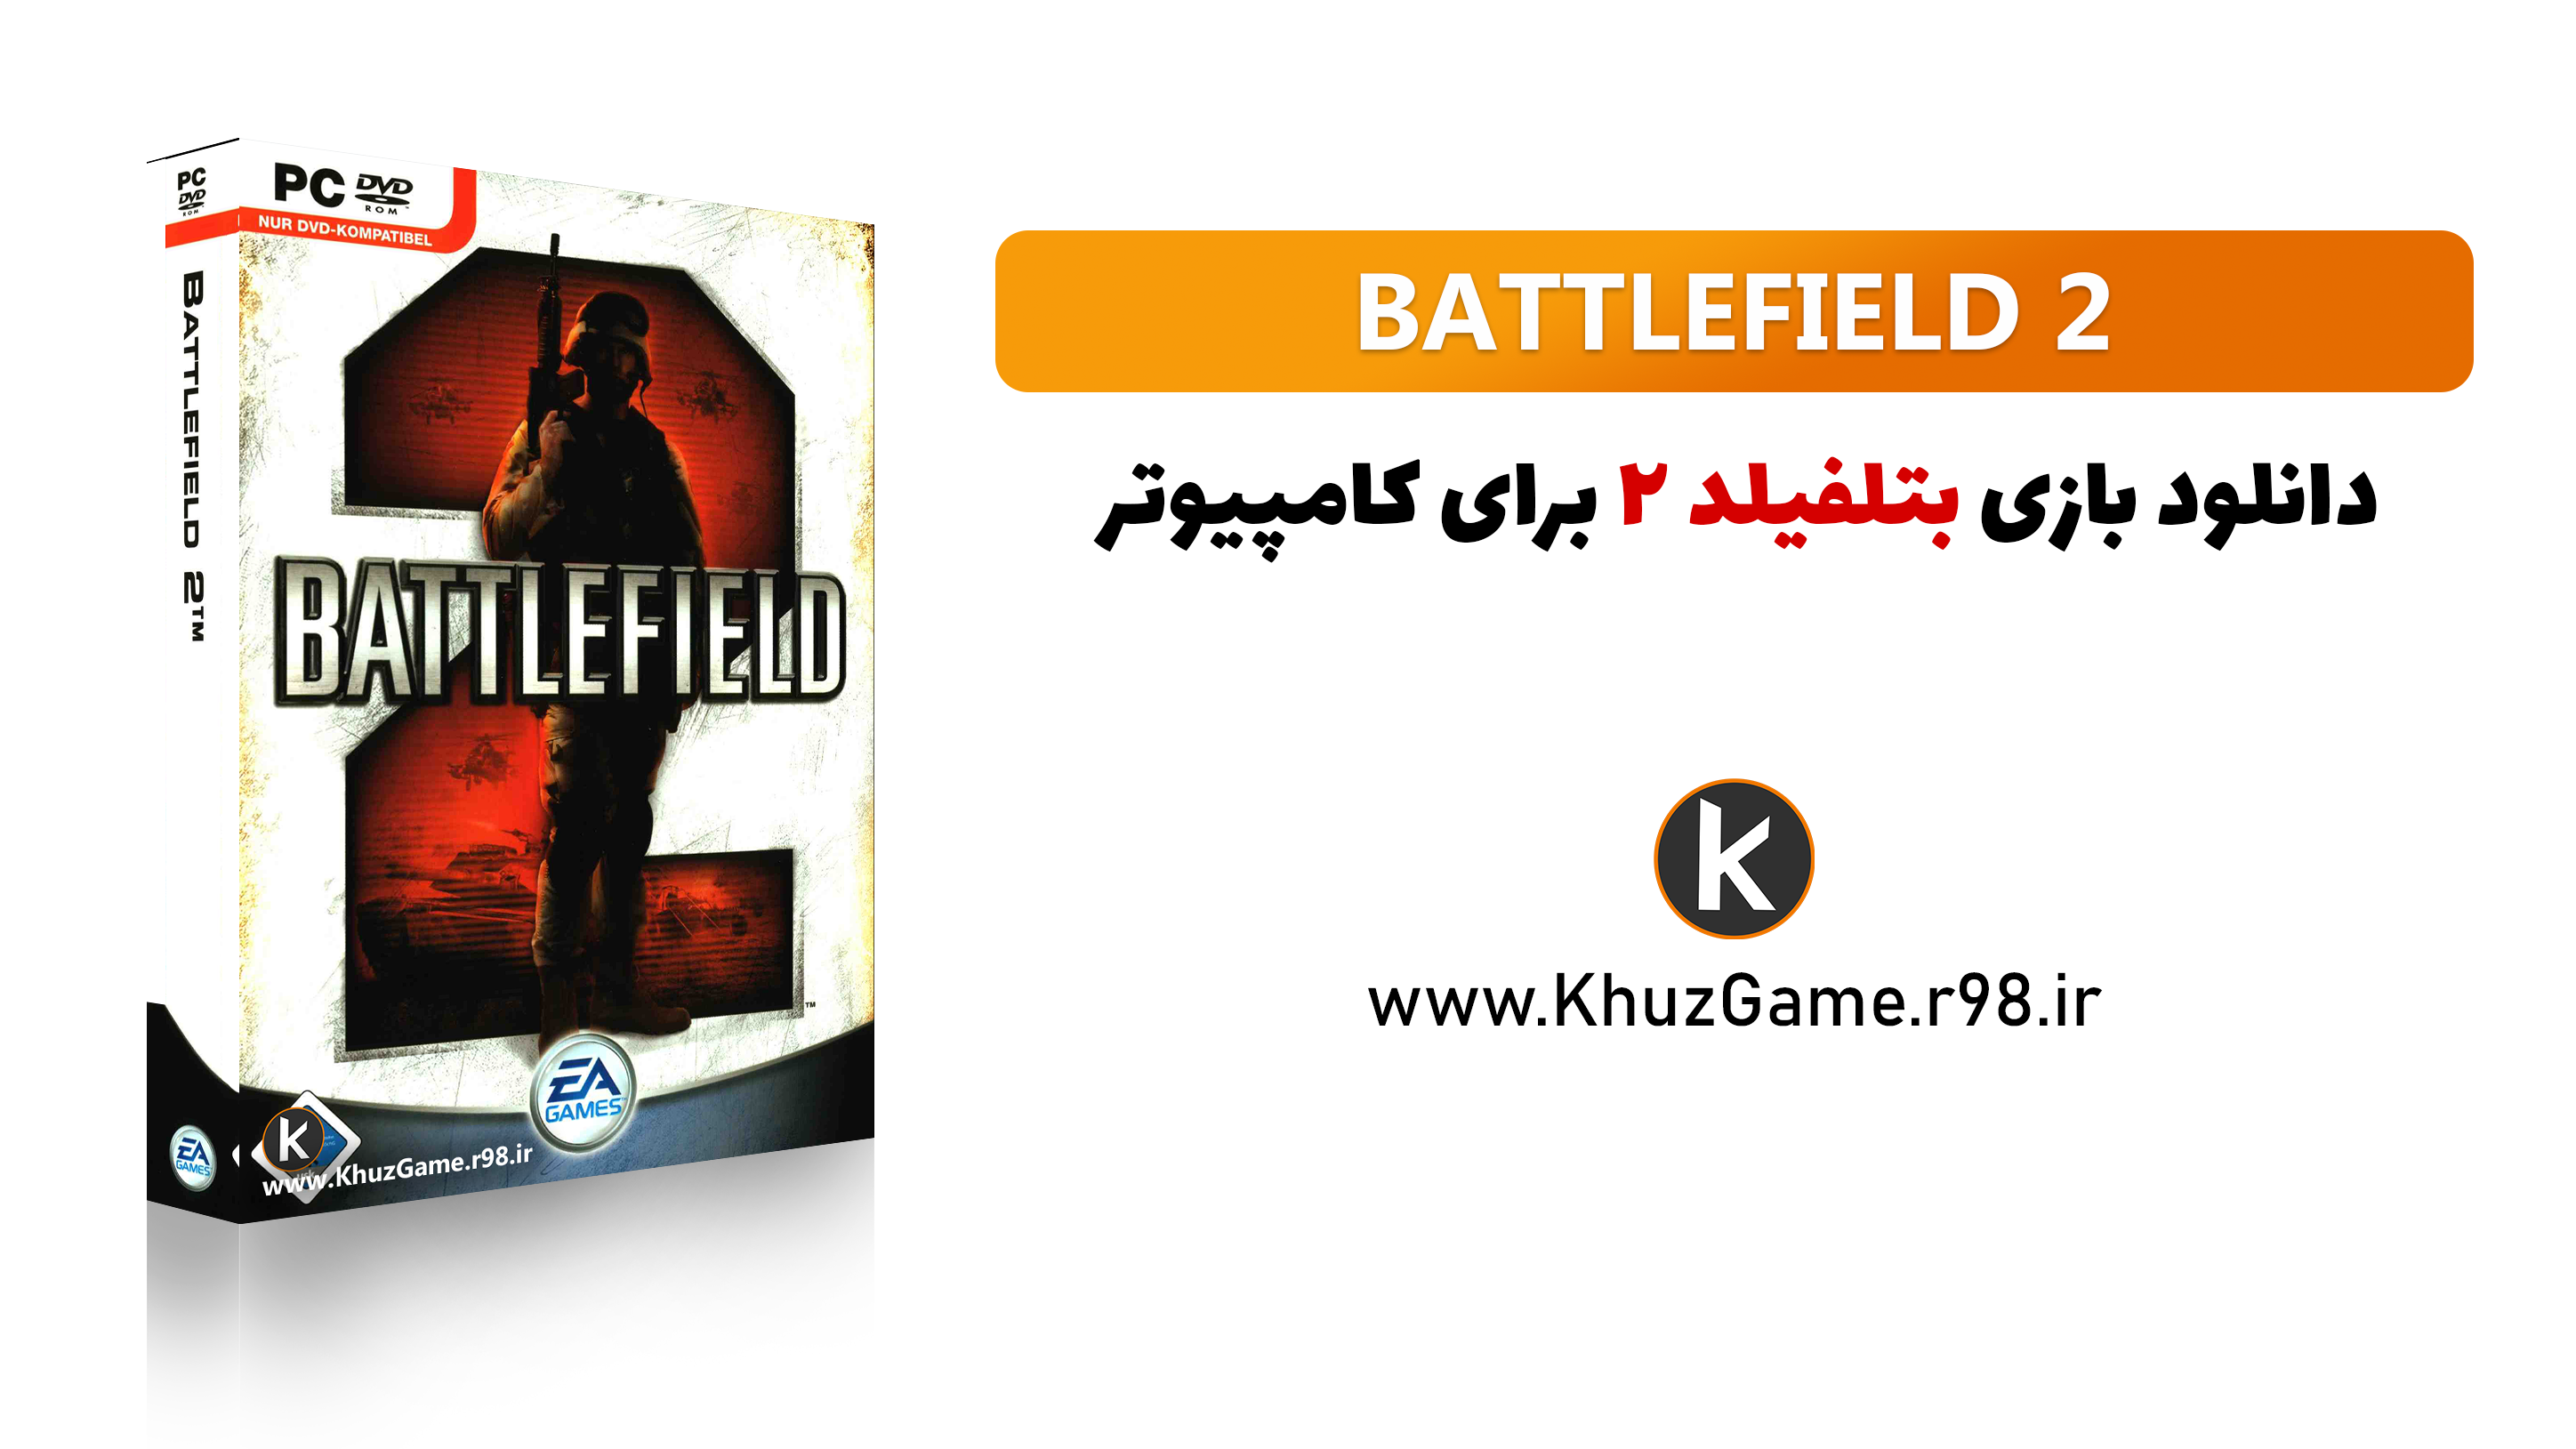 Battlefield 2 free for PC | دانلوود بازی بتلفیلد 2 برای کامپیوتر